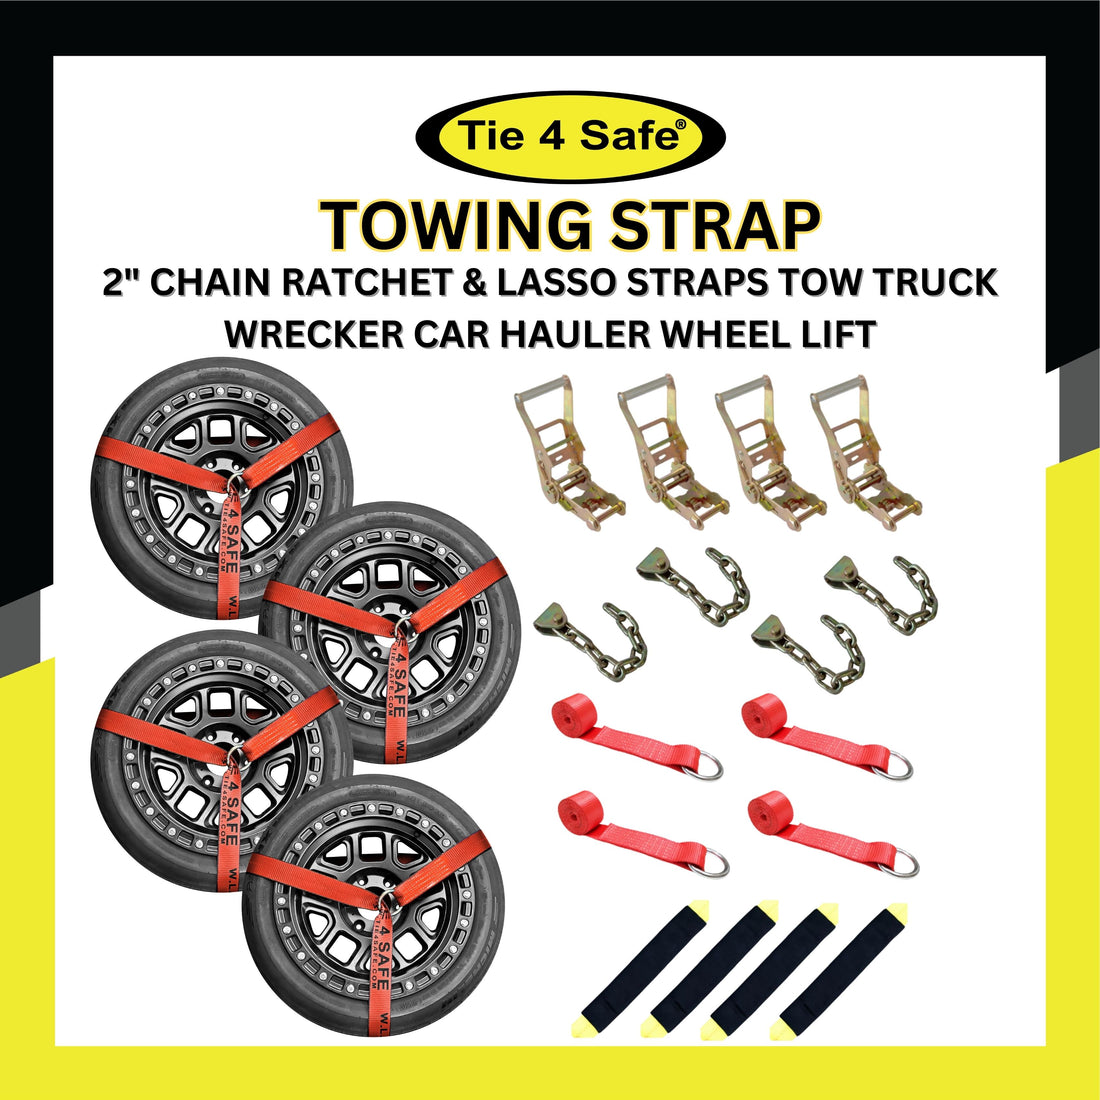 4 Pack 2" Chain Ratchet & Lasso Straps Tow Truck Wrecker Car Hauler Wheel Lift